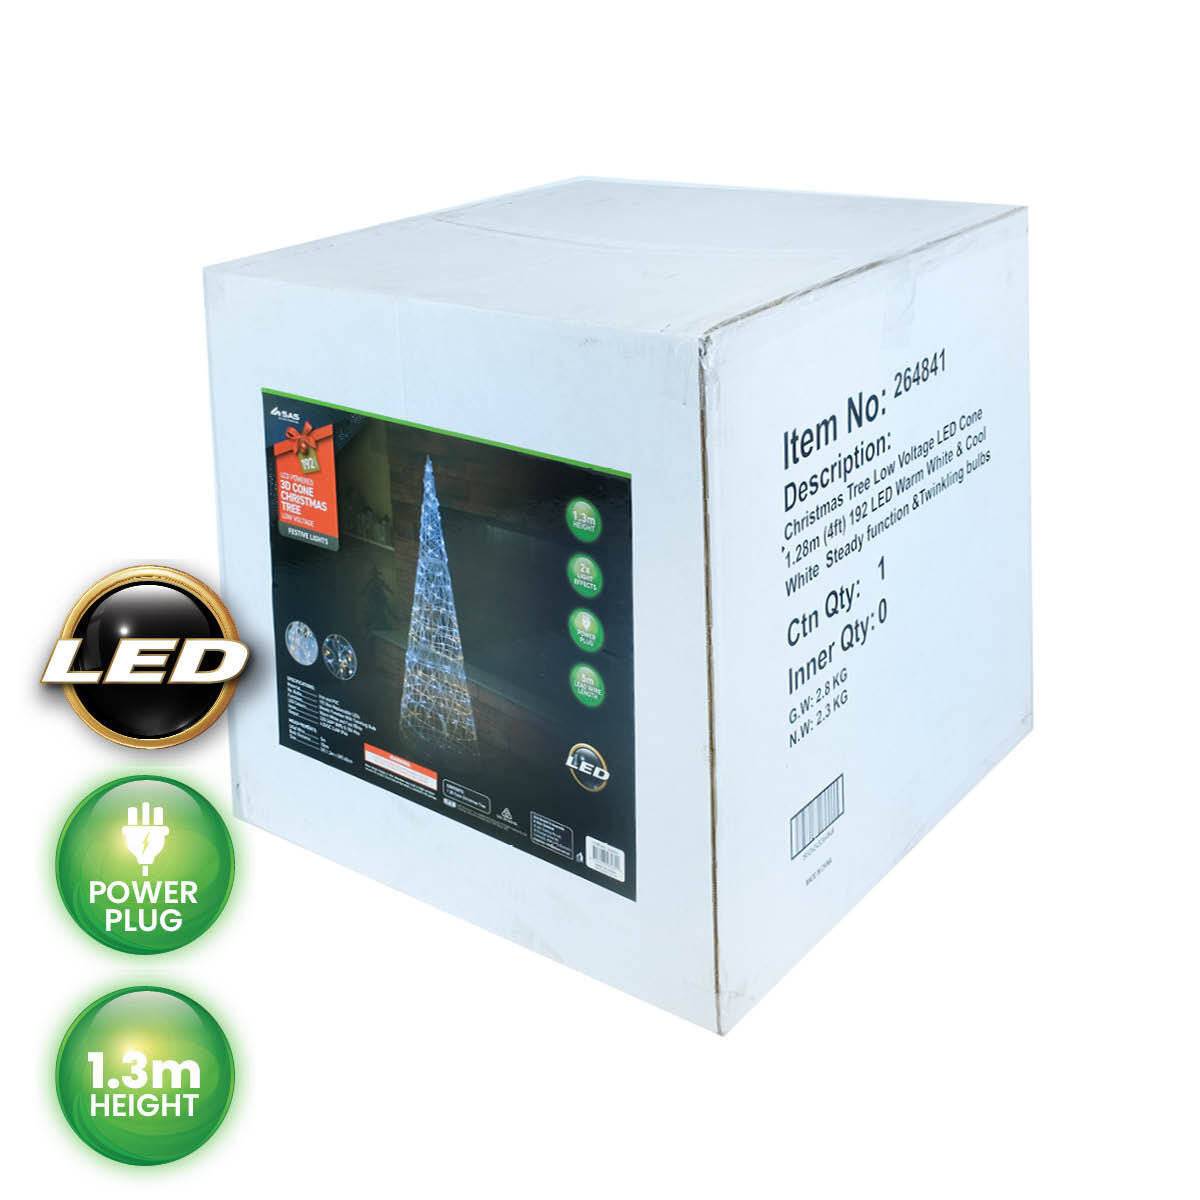 SAS Electrical 1.3m 3D LED Decorative Metal Cone Christmas Tree 192 Lights